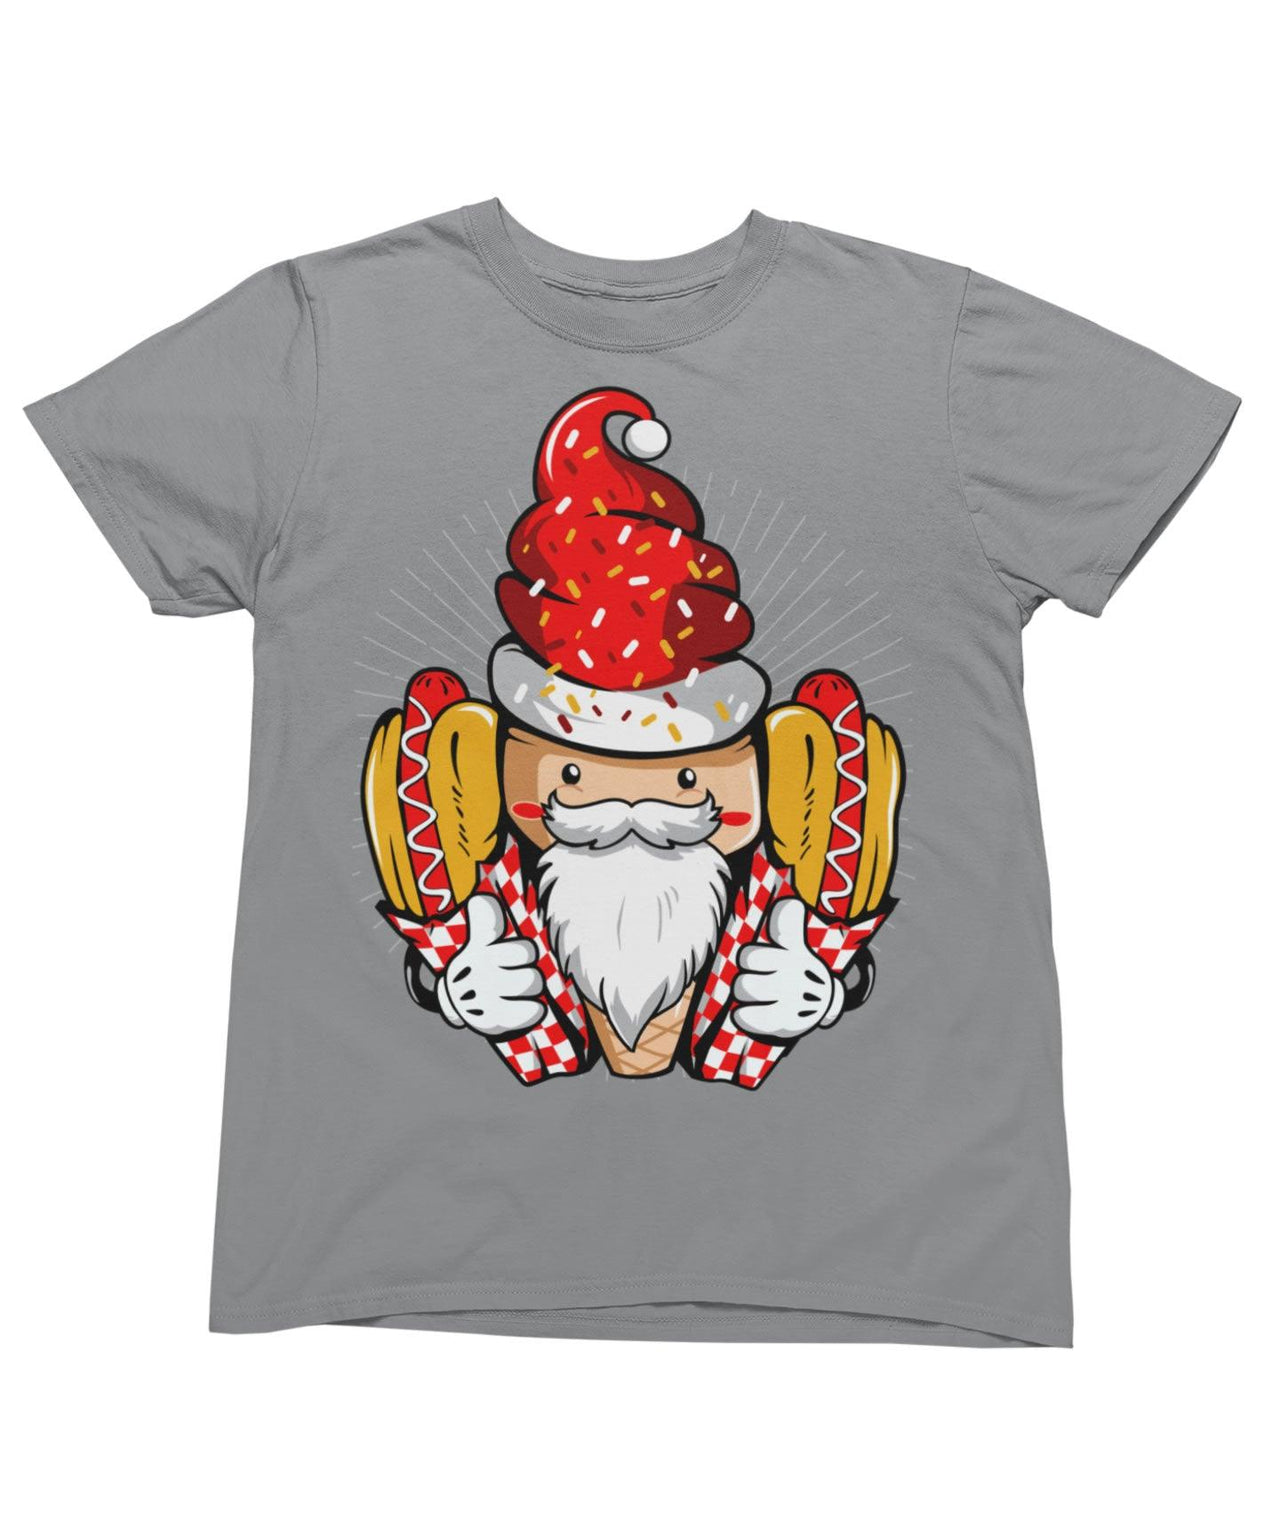 Hotdog Santa Unisex Christmas Unisex T-Shirt 8Ball